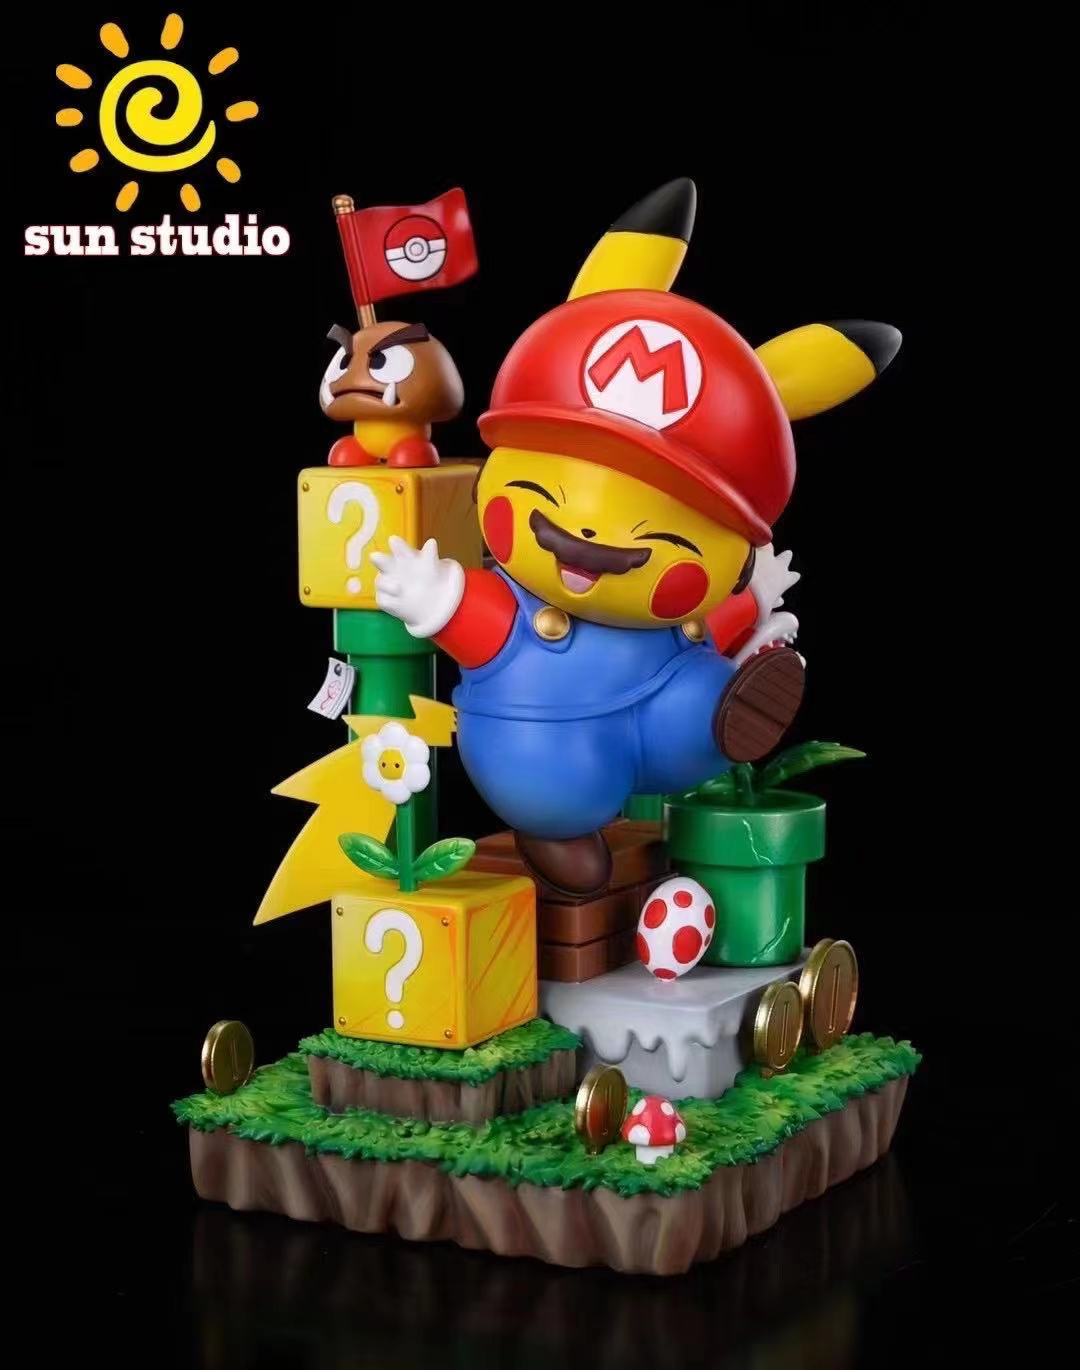 Sun Studio - Pikachu cosplay Super Mario